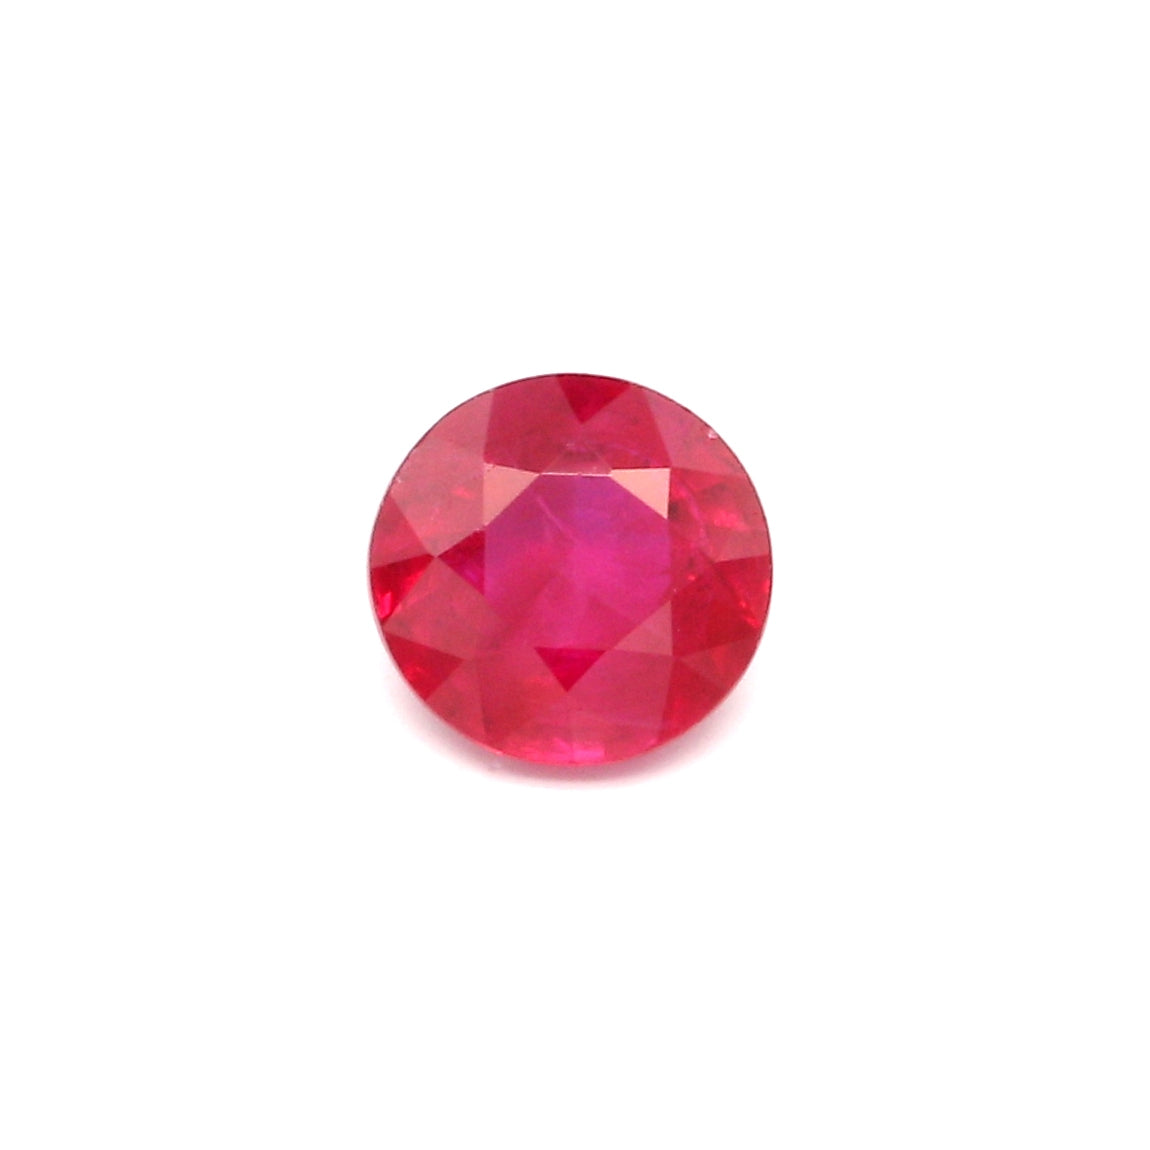 0.48ct Round Ruby, H(a), Myanmar - 4.59 x 4.70 x 2.55mm